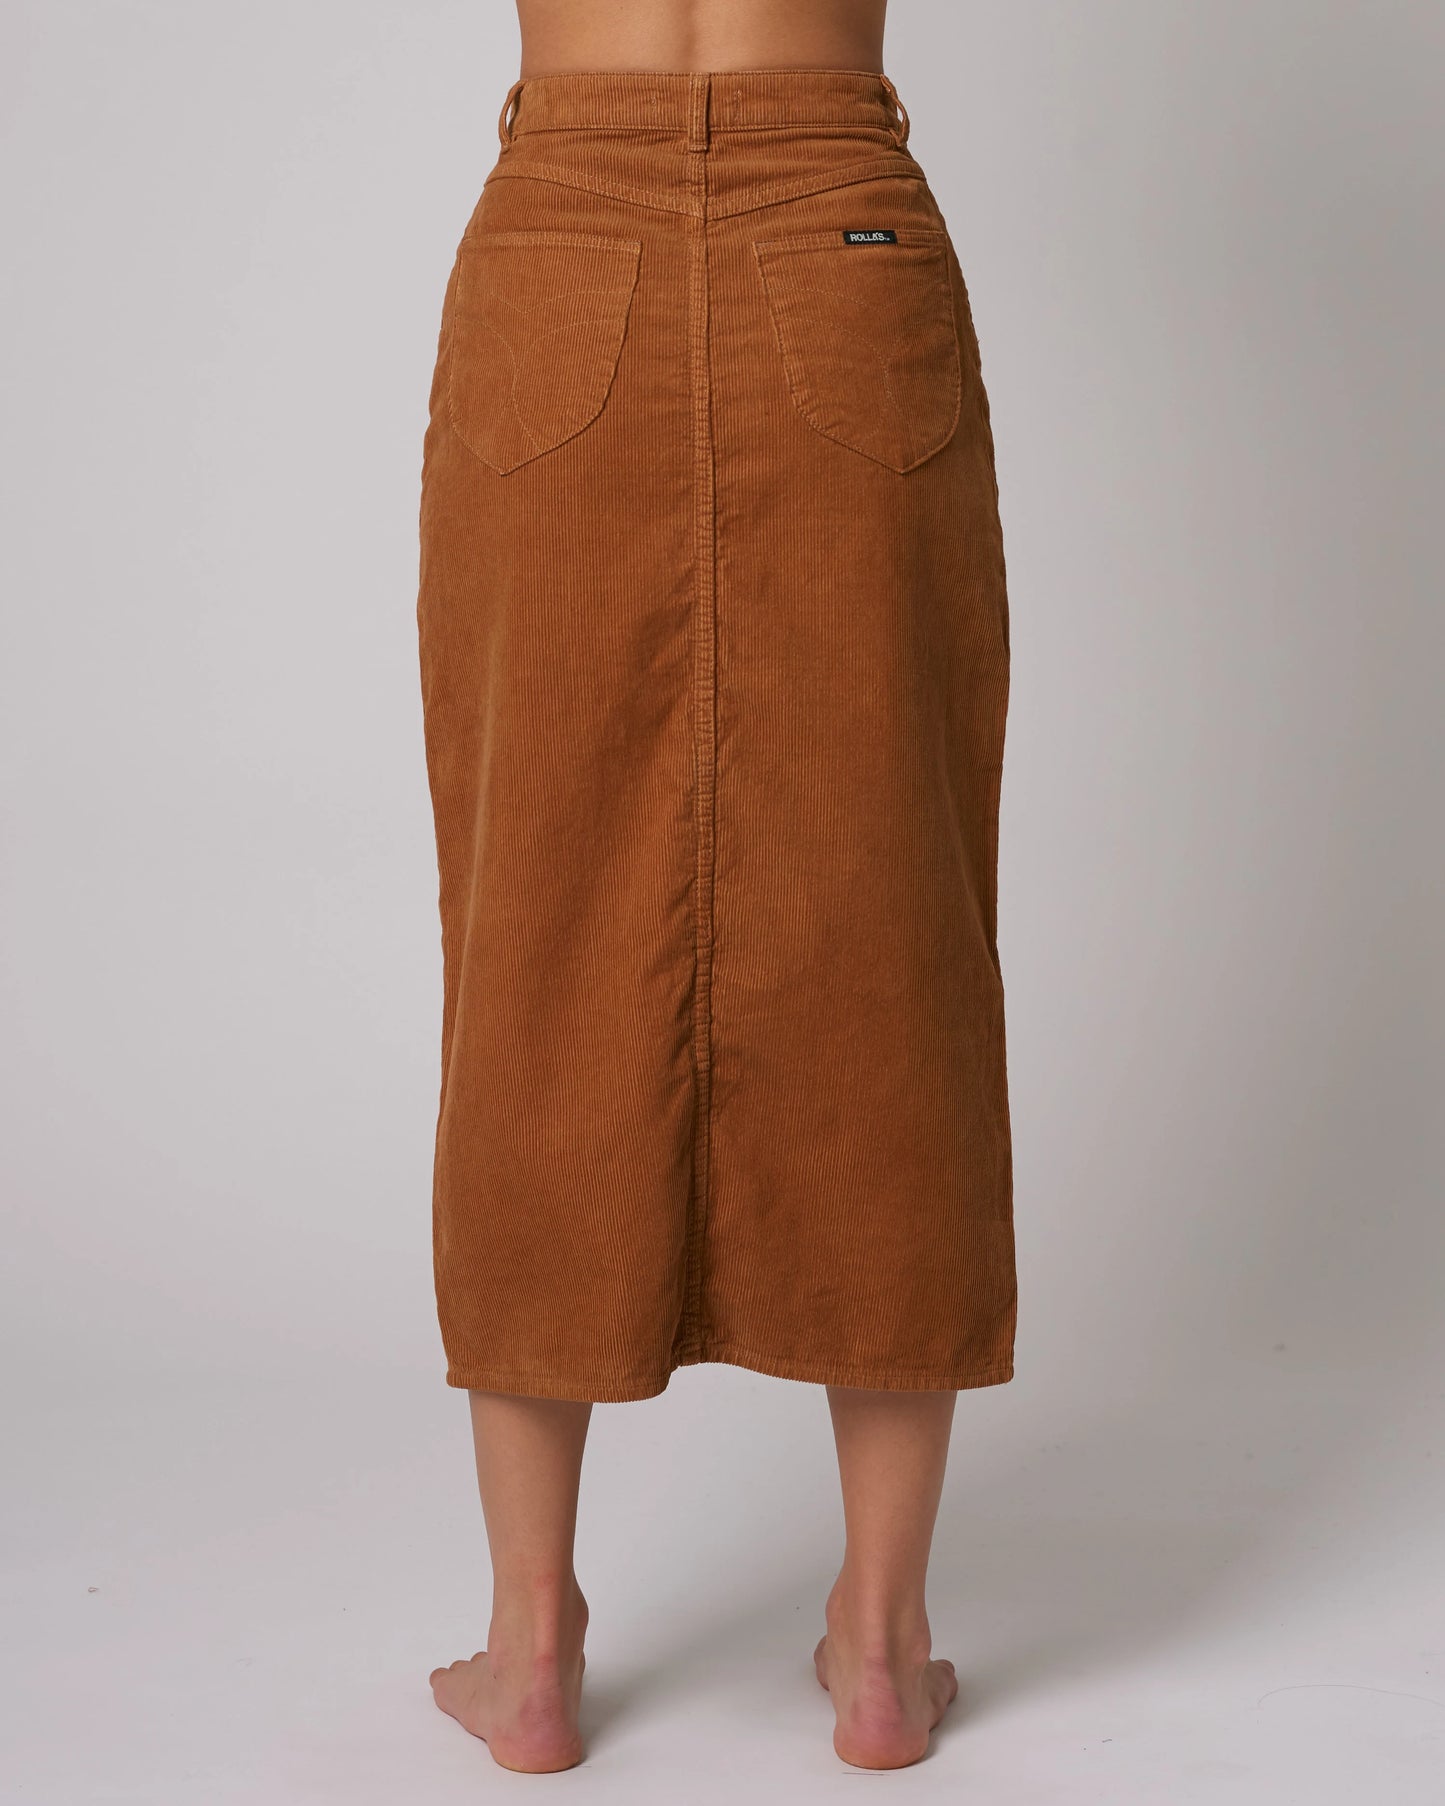 Chicago Skirt Tan Cord